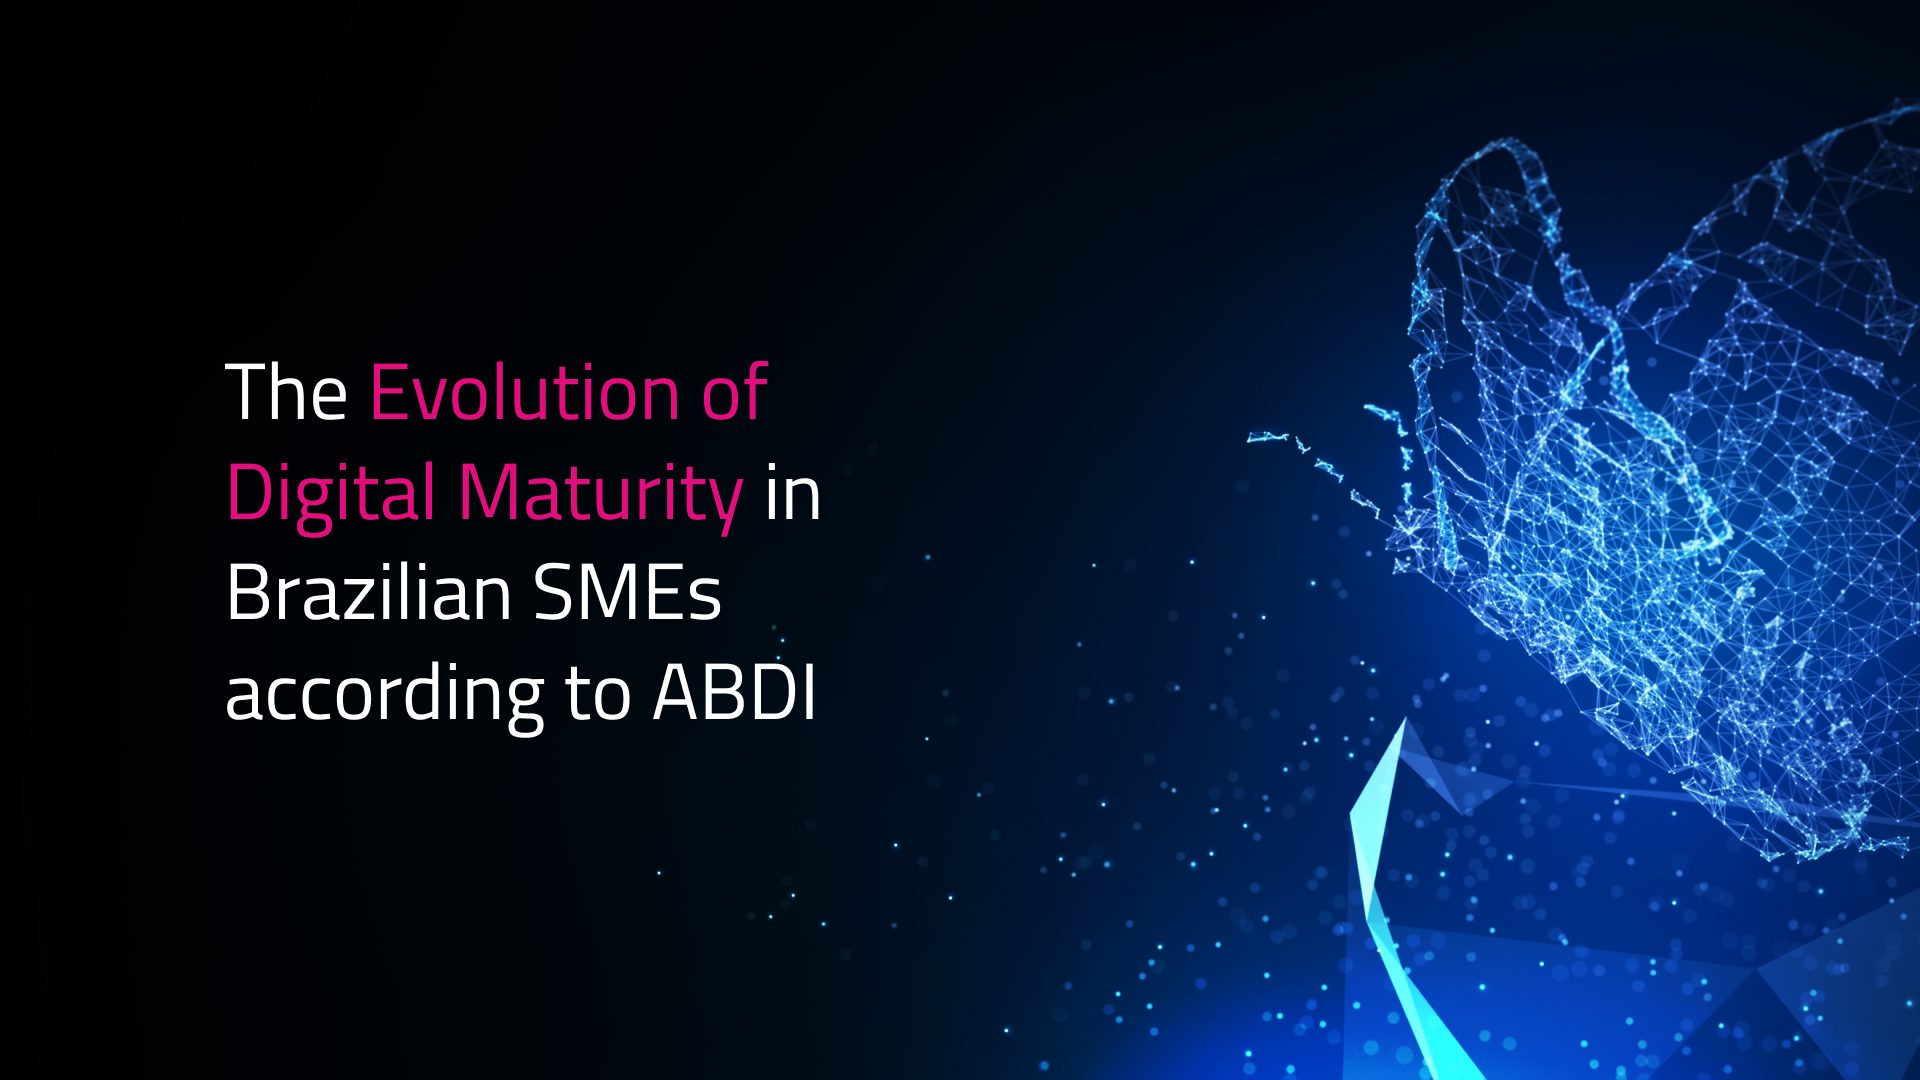 The Evolution of Digital Maturity in Brazilian SMEs according to ABDI